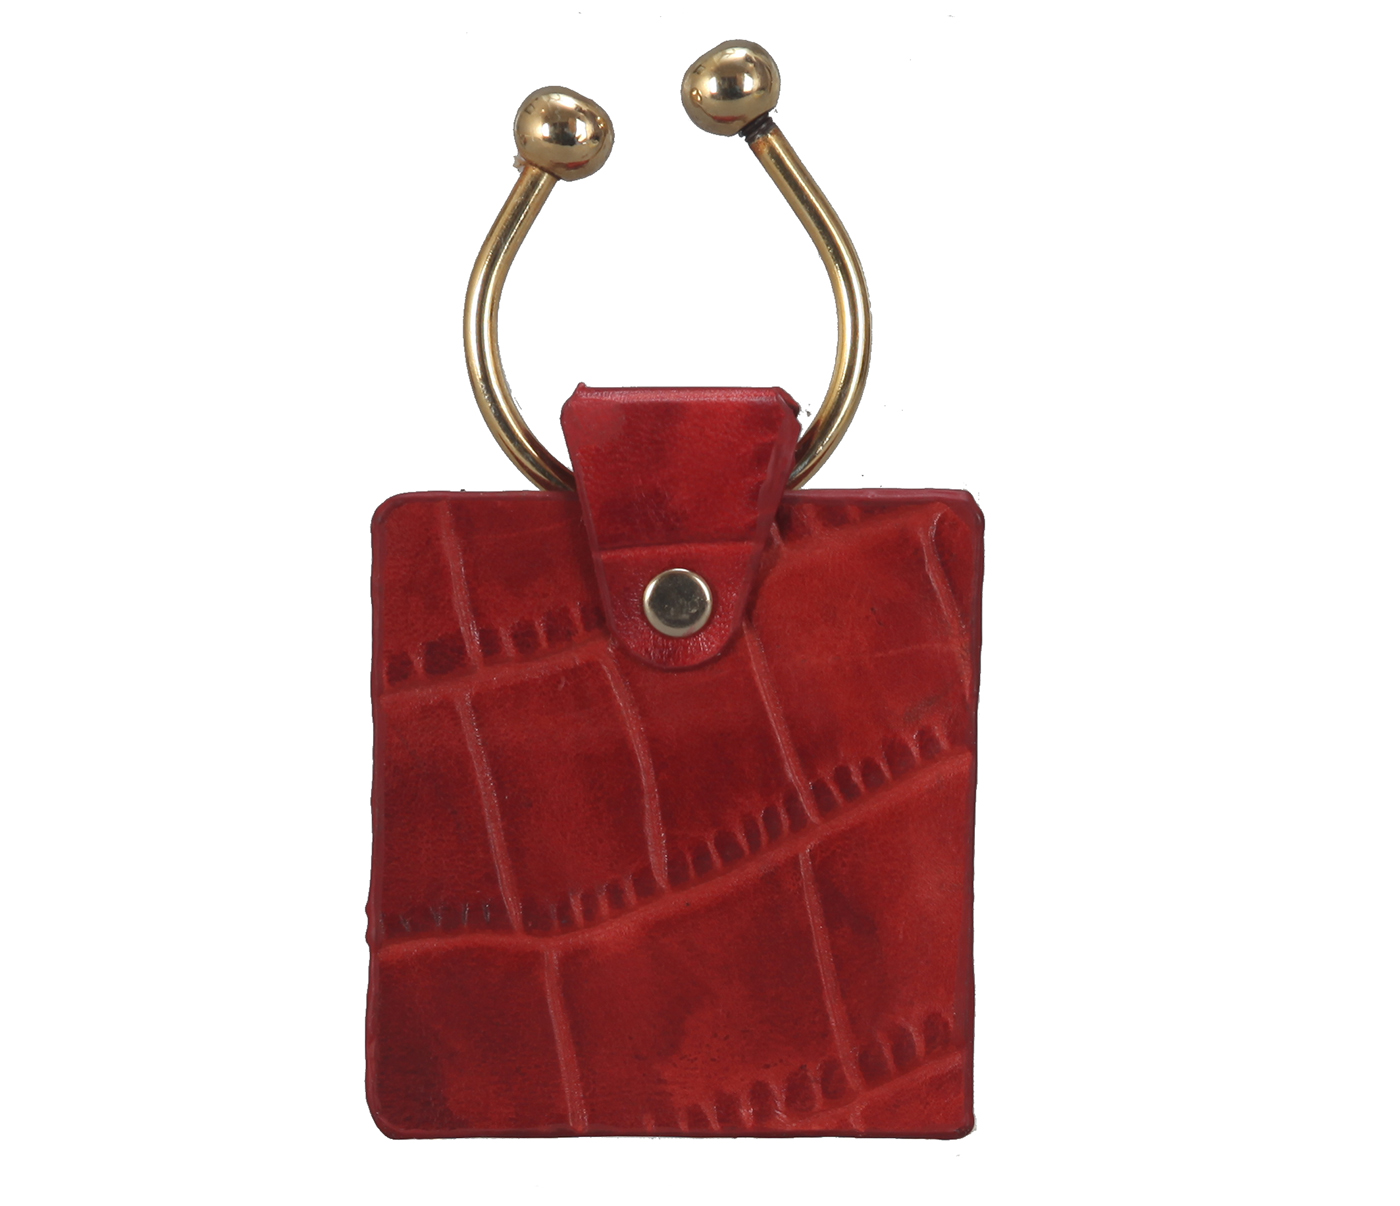 W269--Key holder with knob screw key fitting in Genuine Leather - Red